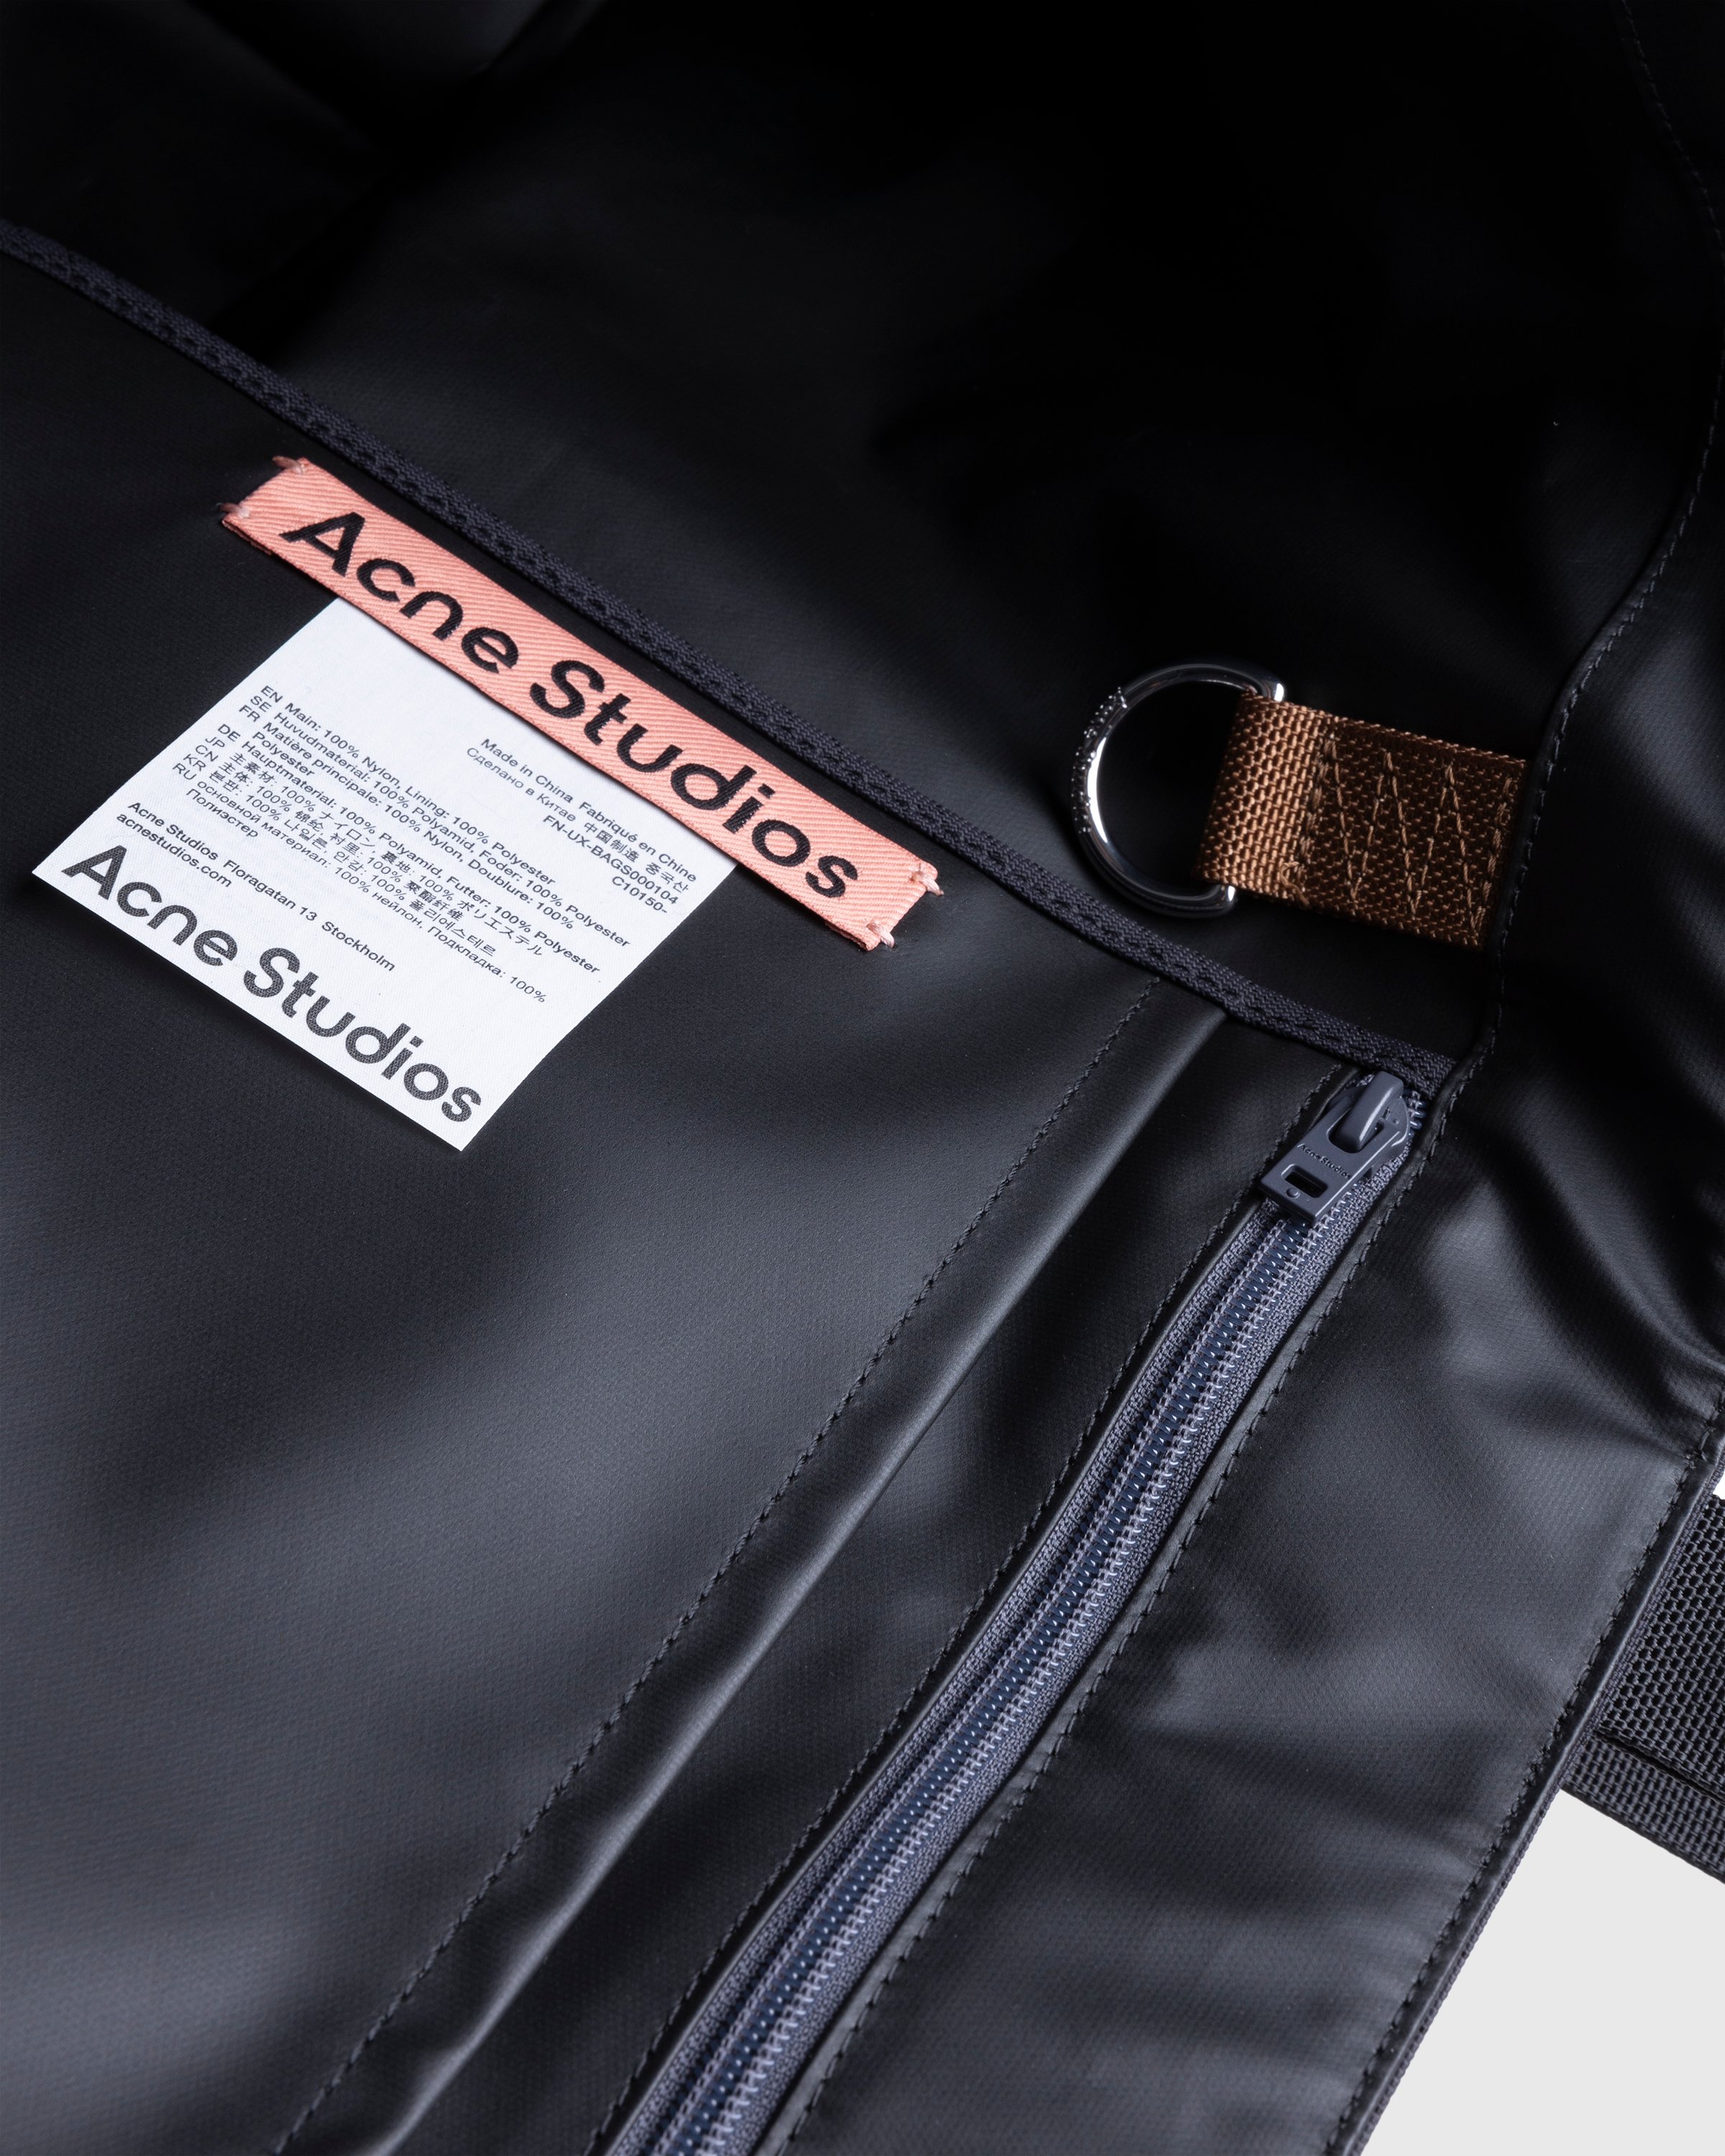 Acne Studios - Nylon Tote Bag Black - Accessories - Black - Image 5